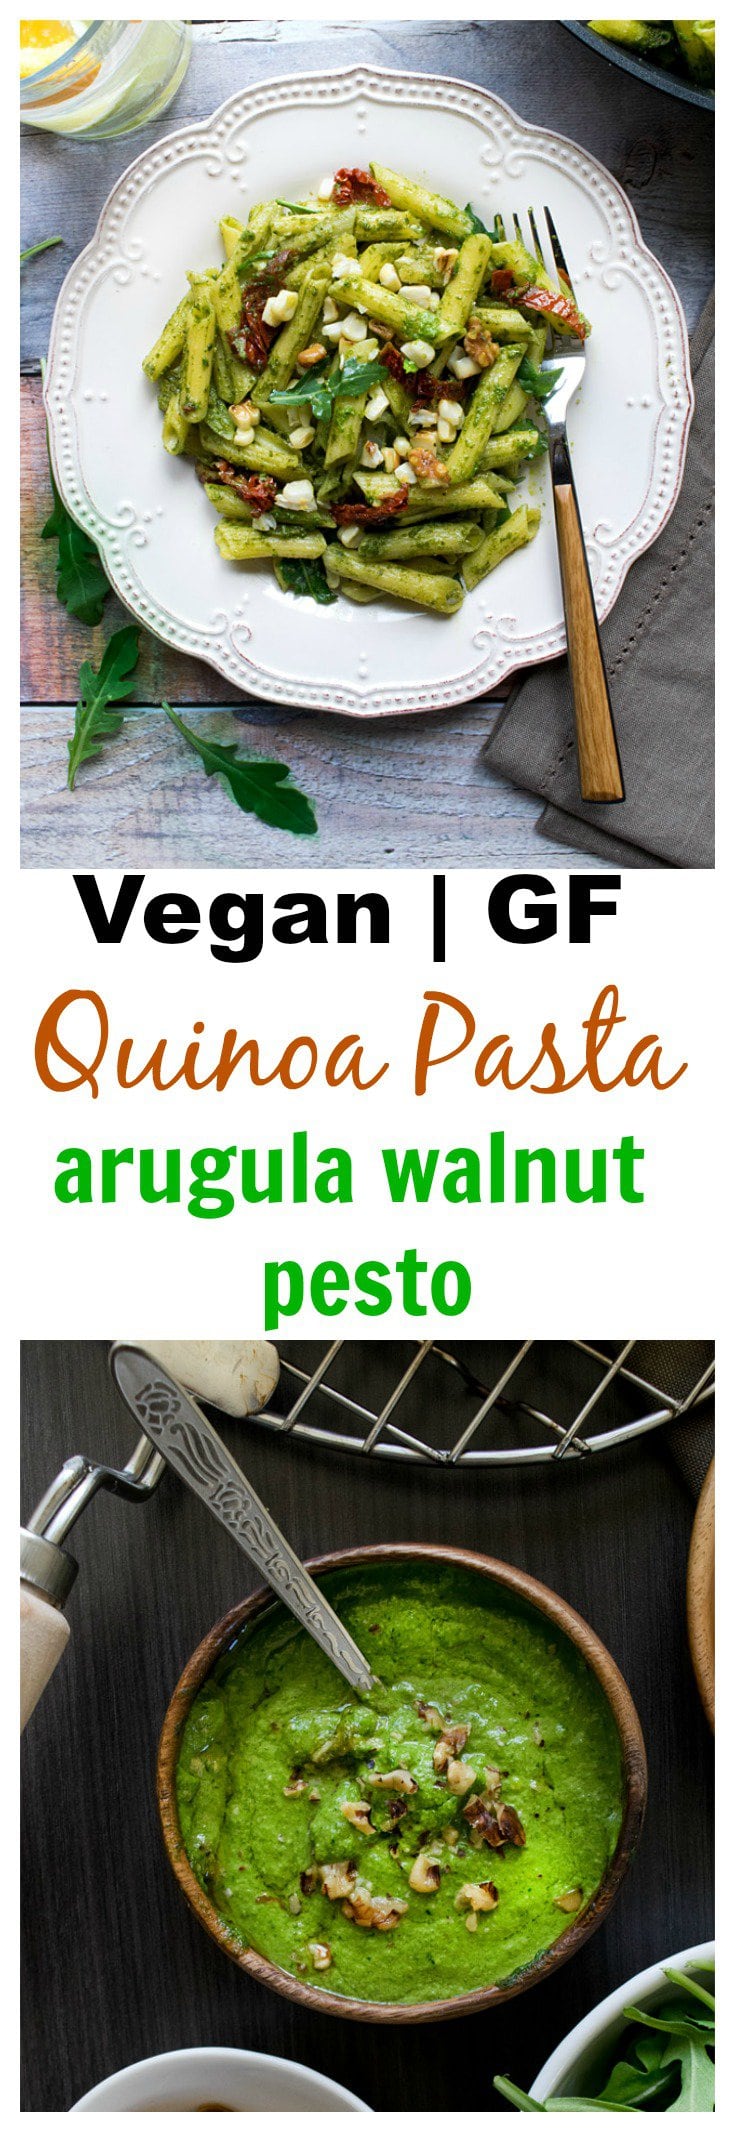 vegan-glutenfree-quinoa-pasta-with-arugula-pesto